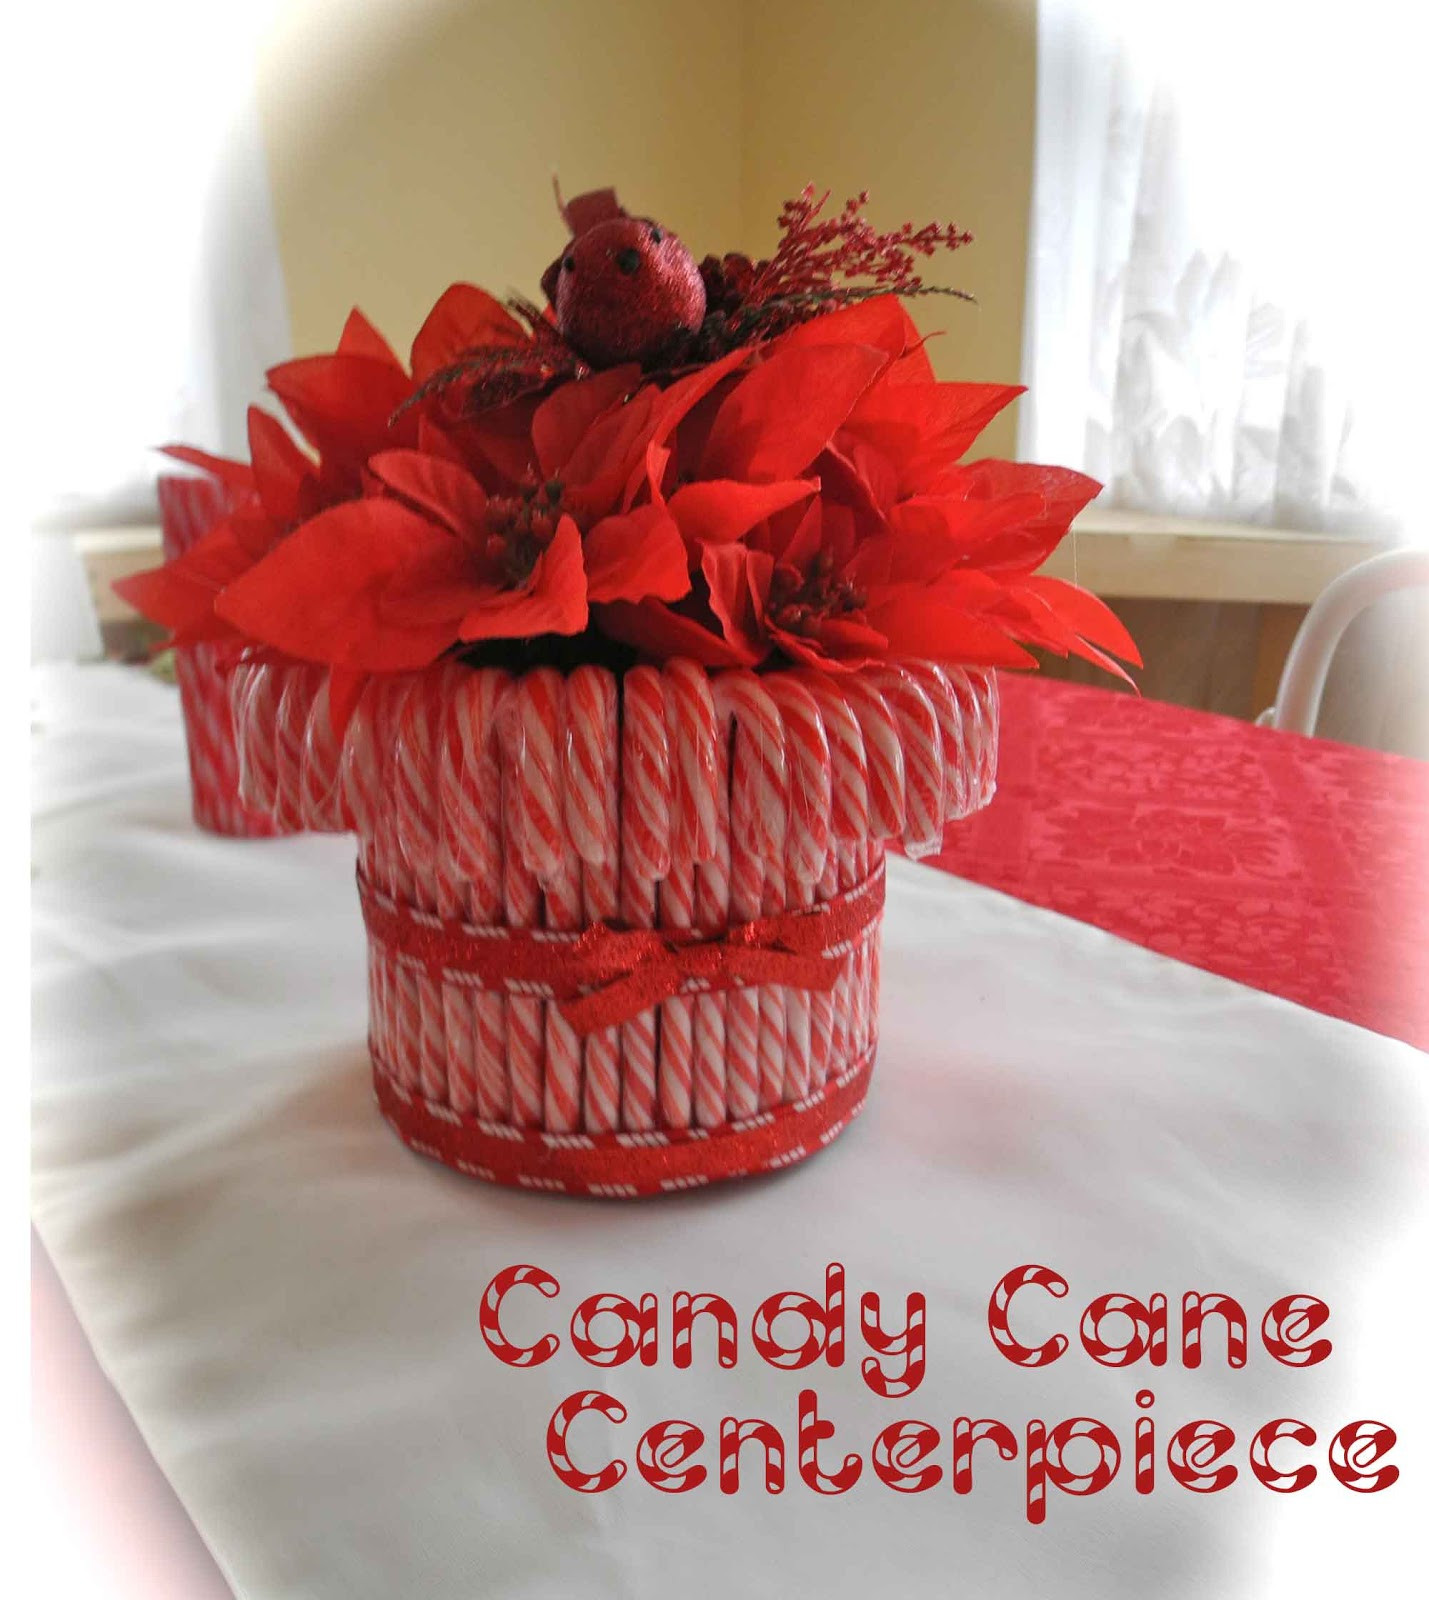 Candy Cane Centerpieces For Christmas
 Candy Cane Centerpiece